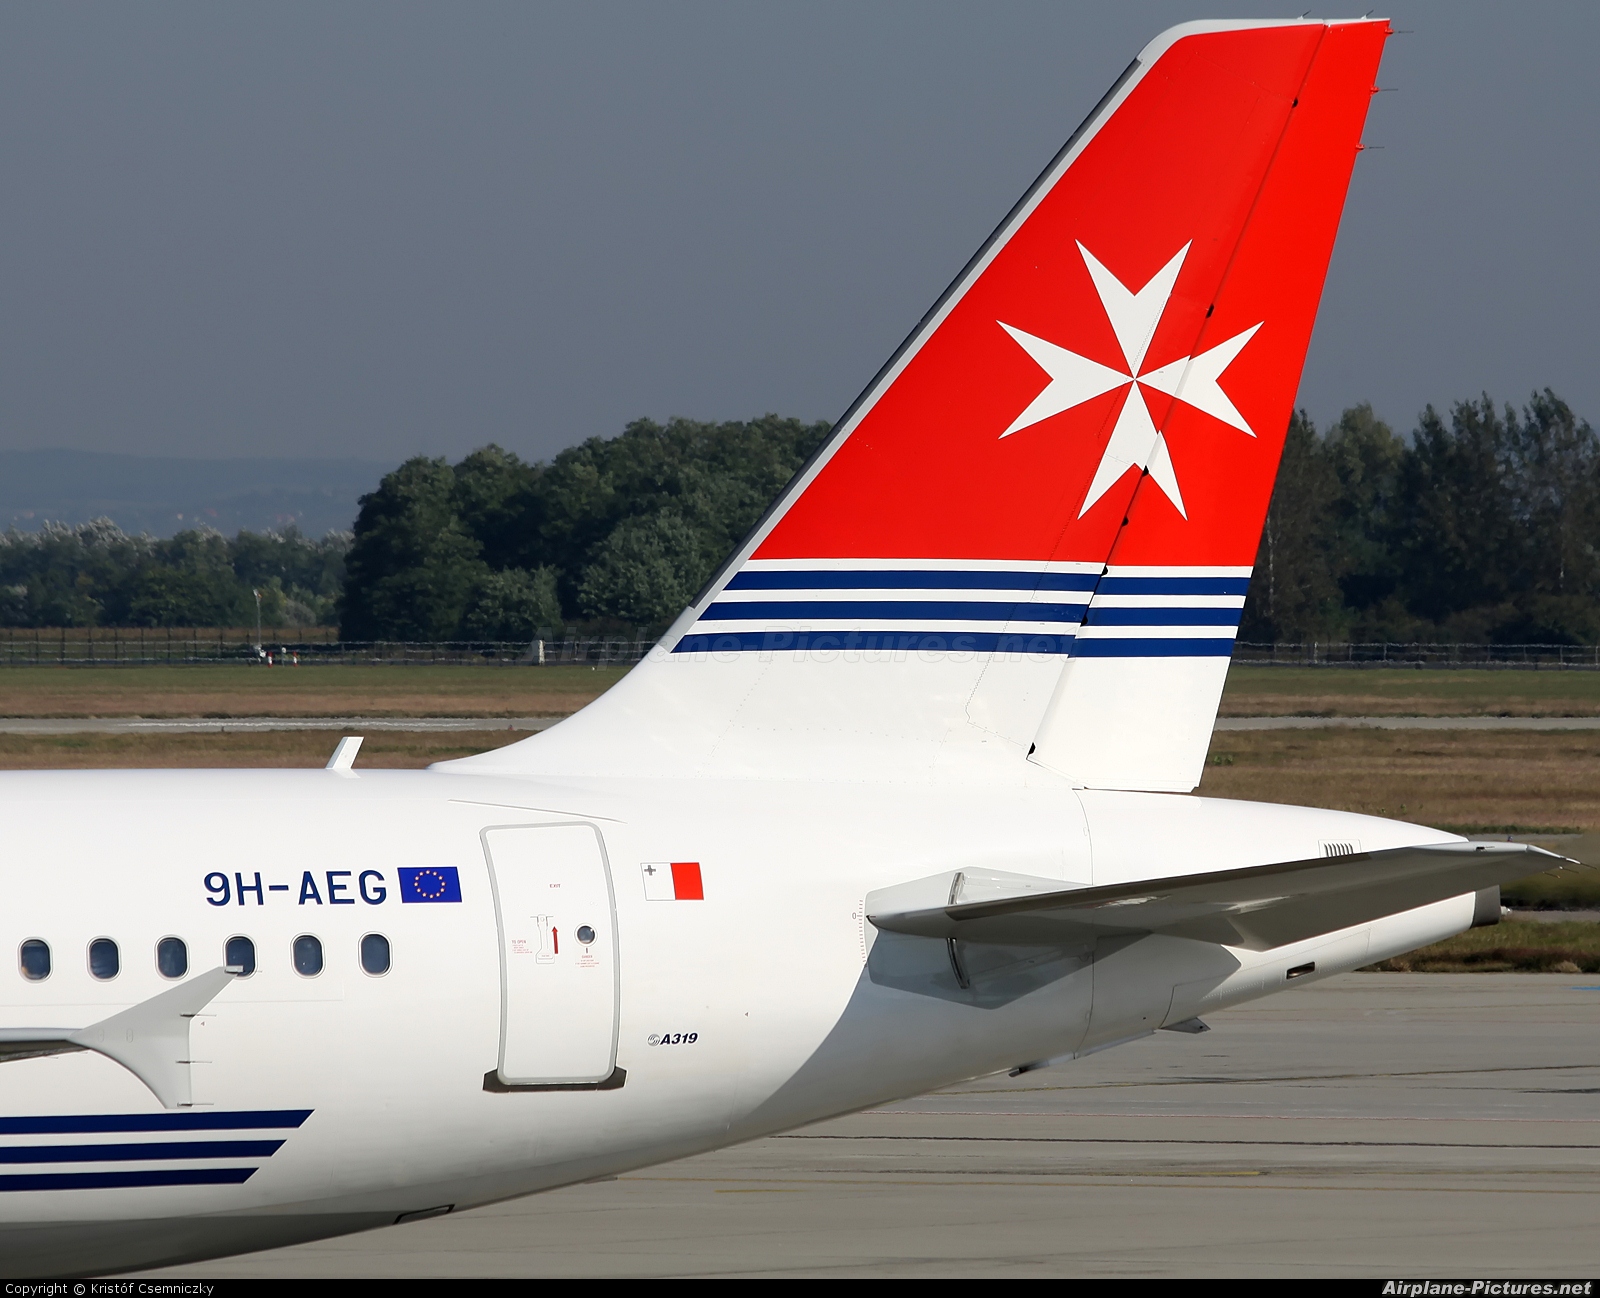 Air Malta 9H-AEG aircraft at Budapest Ferenc Liszt International Airport